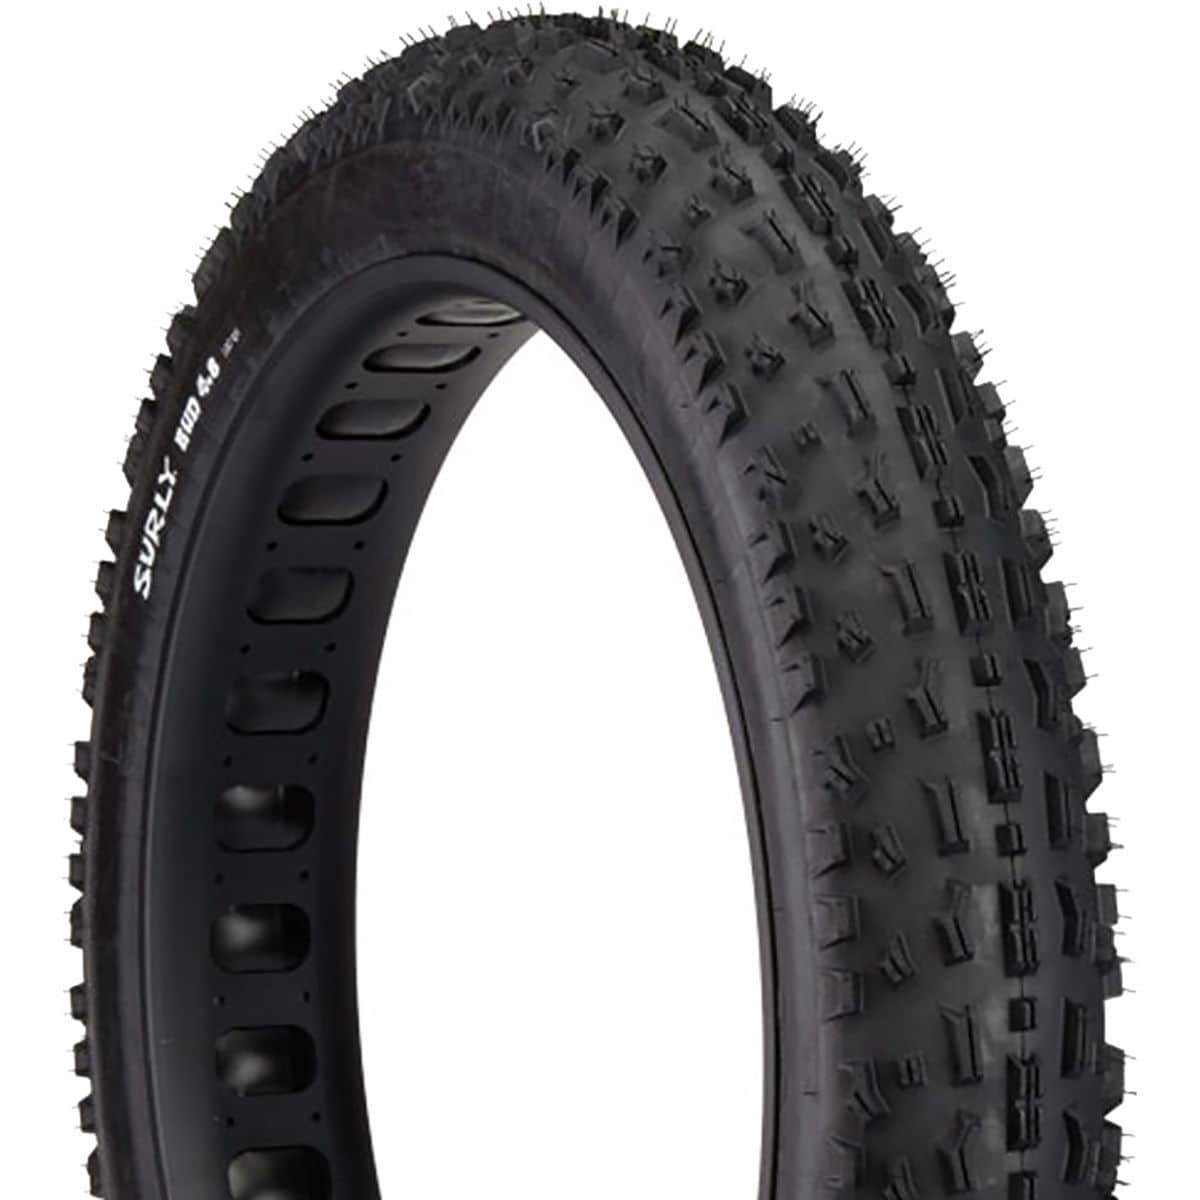 Surly Bud Fat Bike Tire - Tubeless Black, 26x4.8